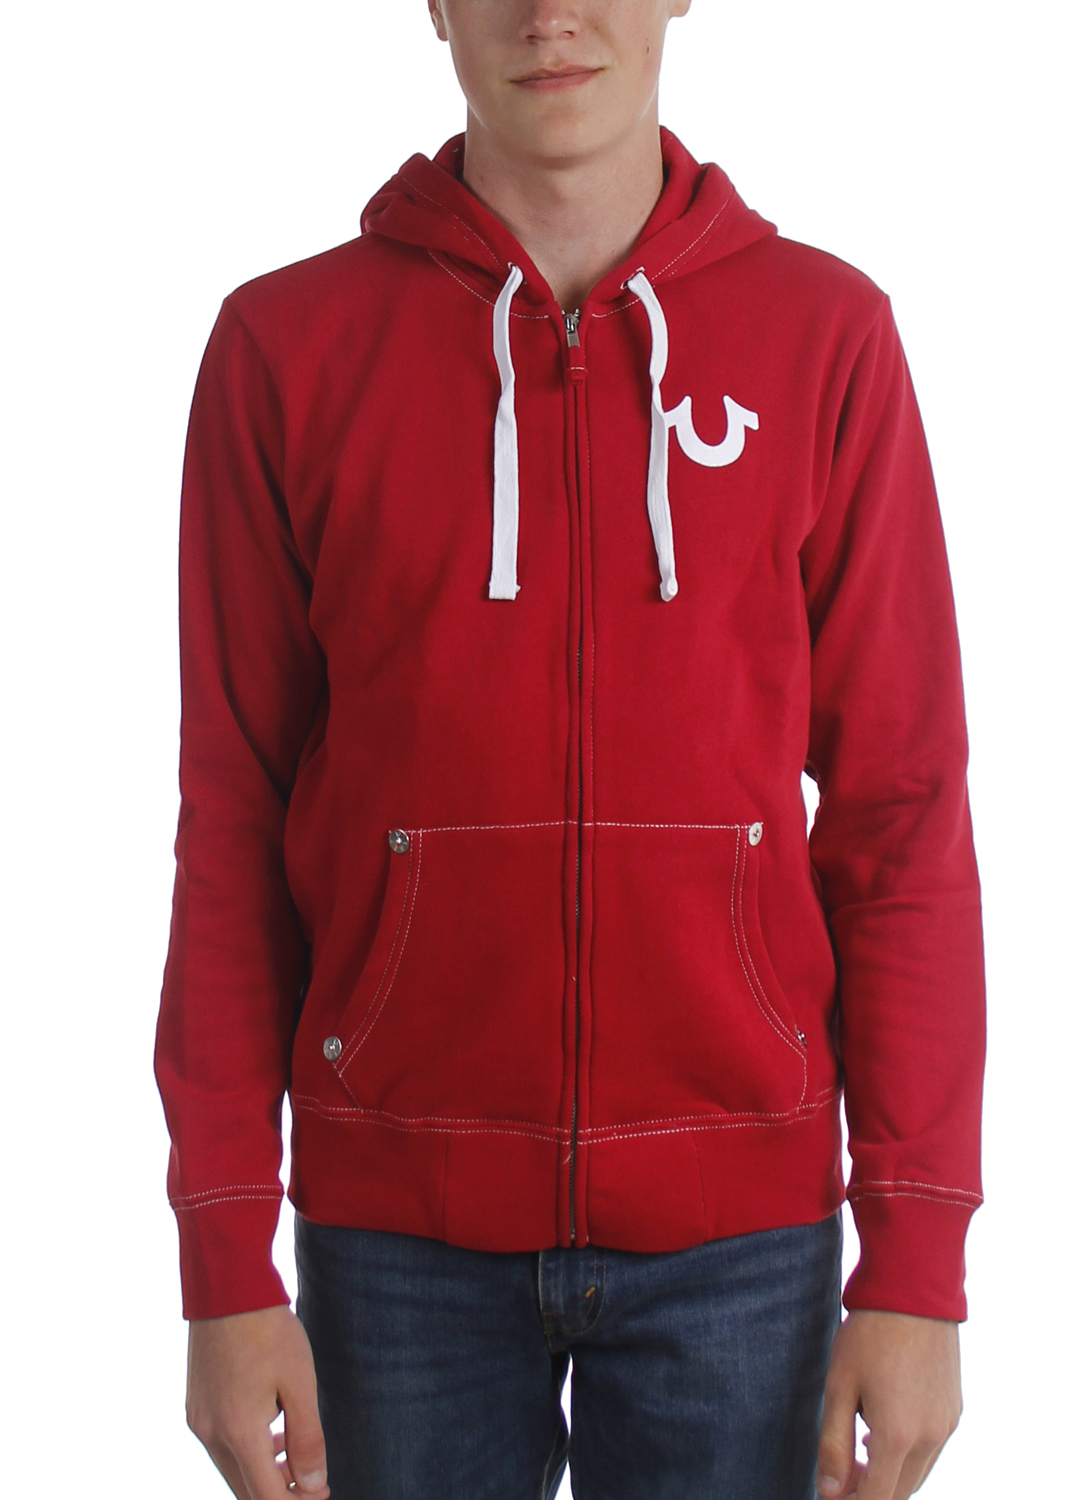 true religion hoodie price